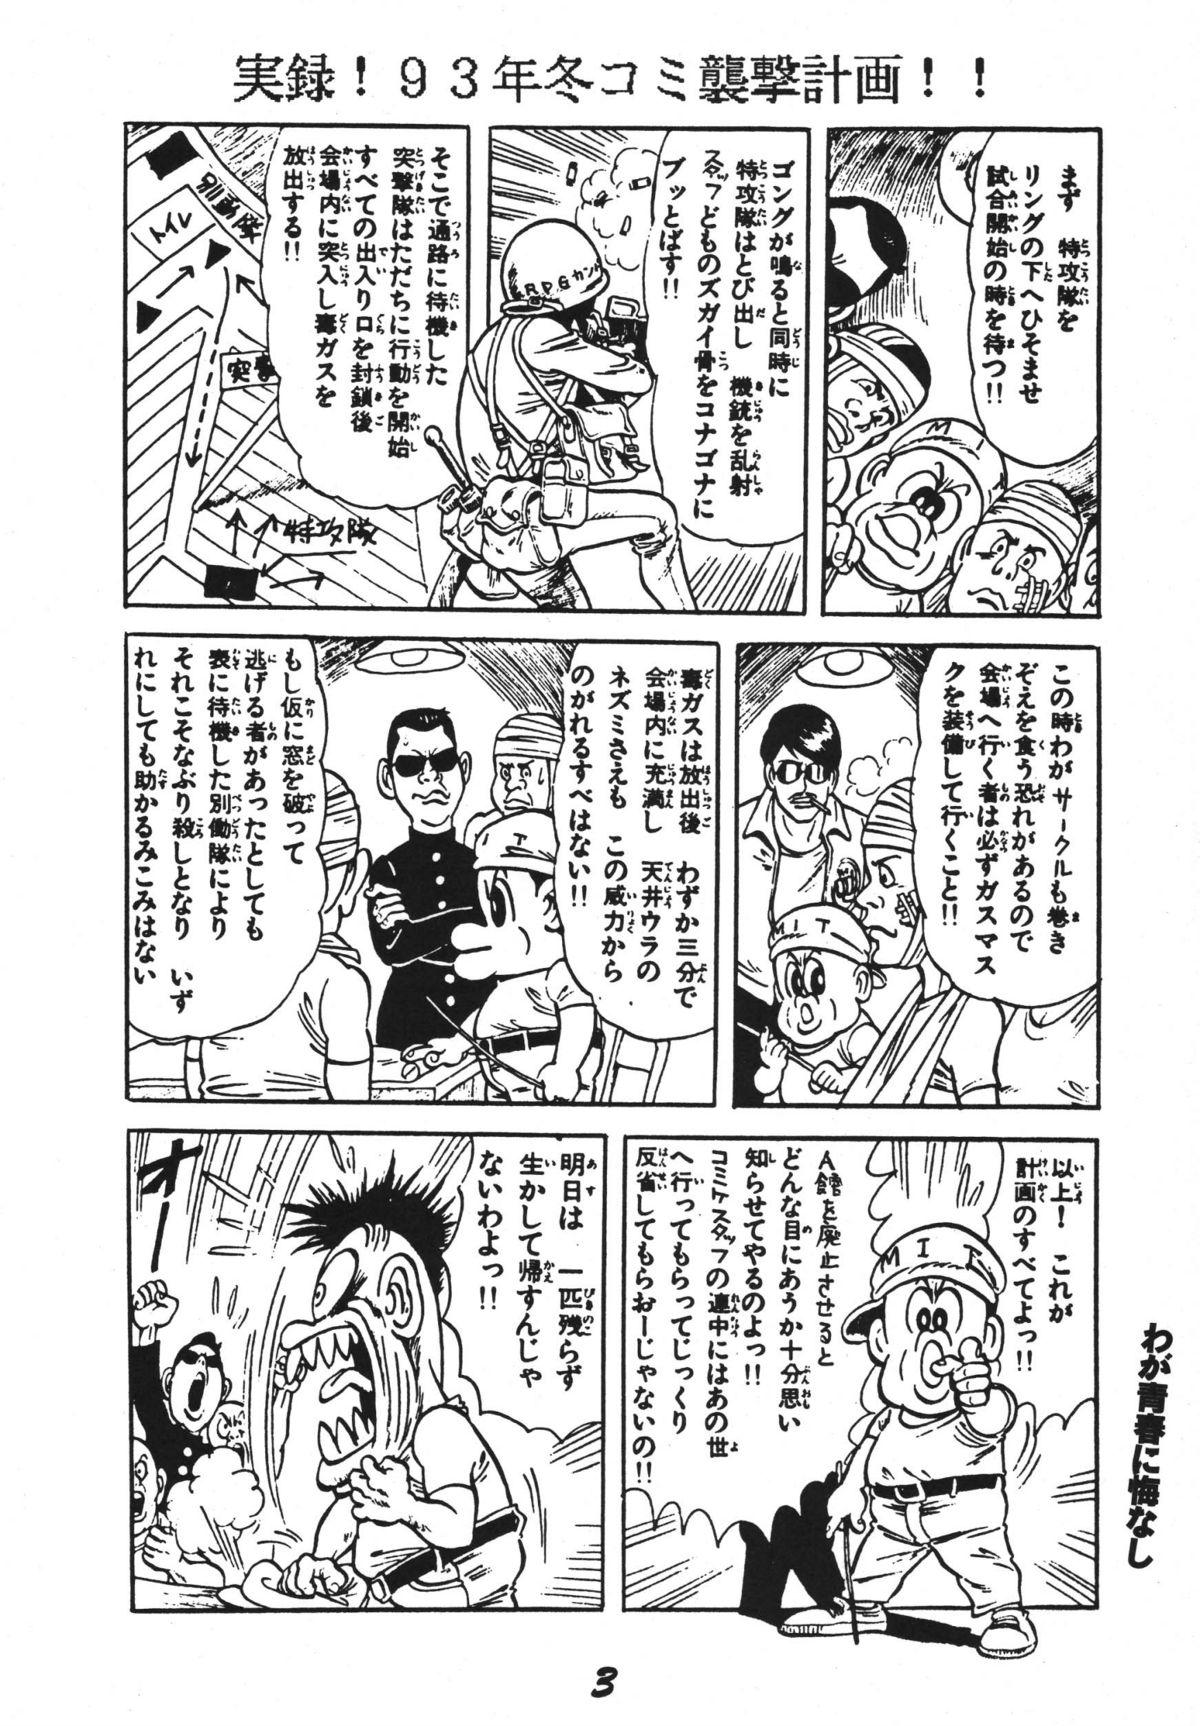 Sharing Koi no Arashi - Sailor moon Street fighter Samurai spirits Brave express might gaine Twinbee Fucking - Page 3